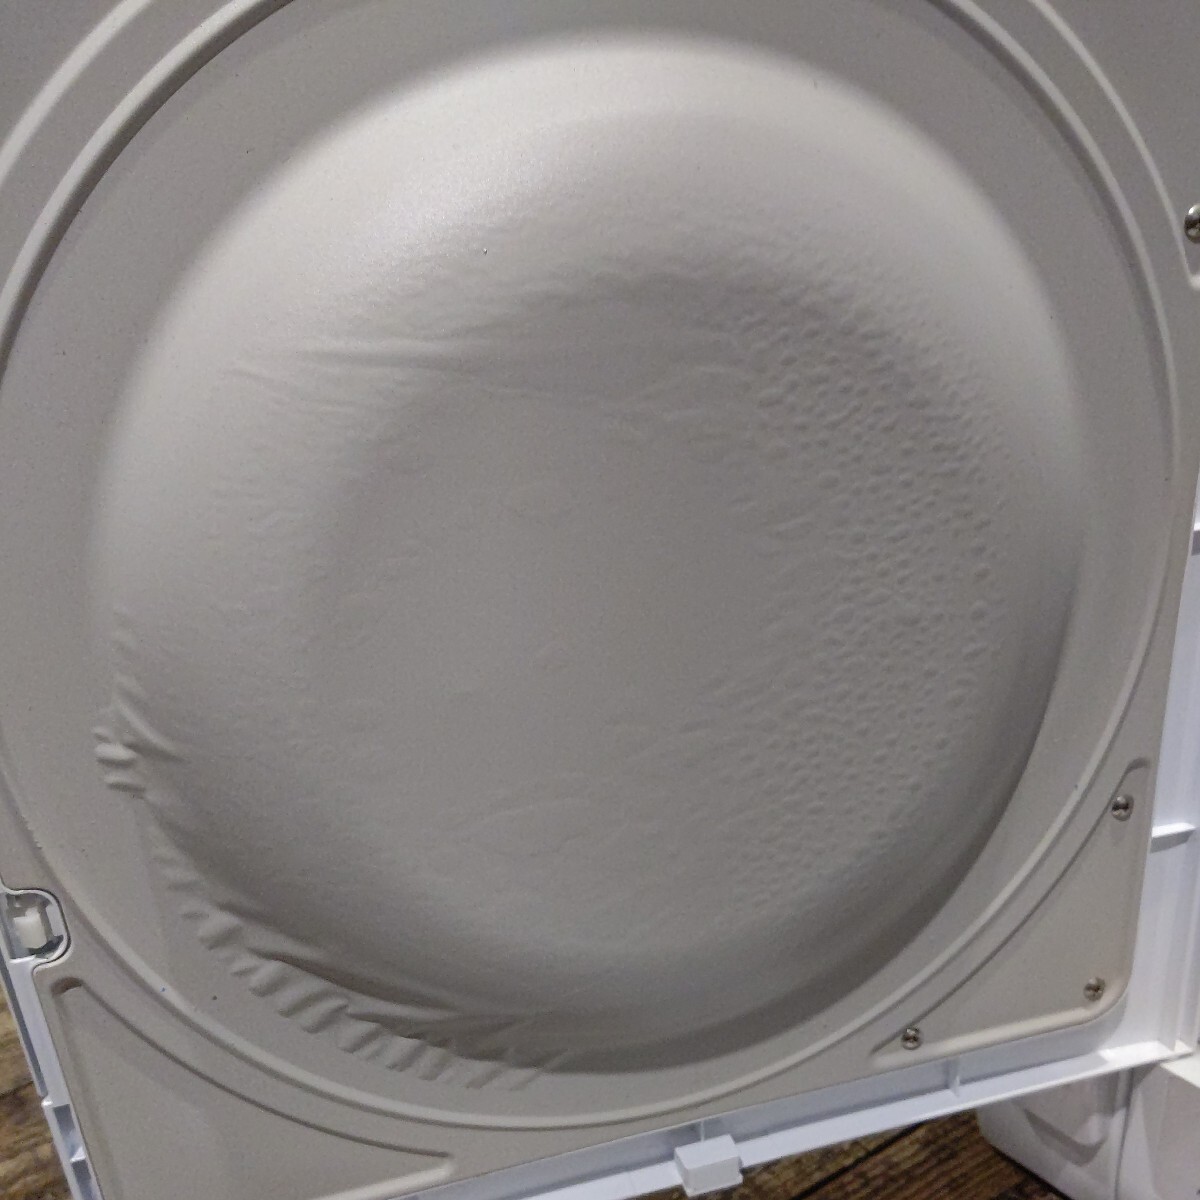 HITACHI Hitachi dehumidification shape electric dryer stand attaching DE-N50WV pure white white 2017 year made 